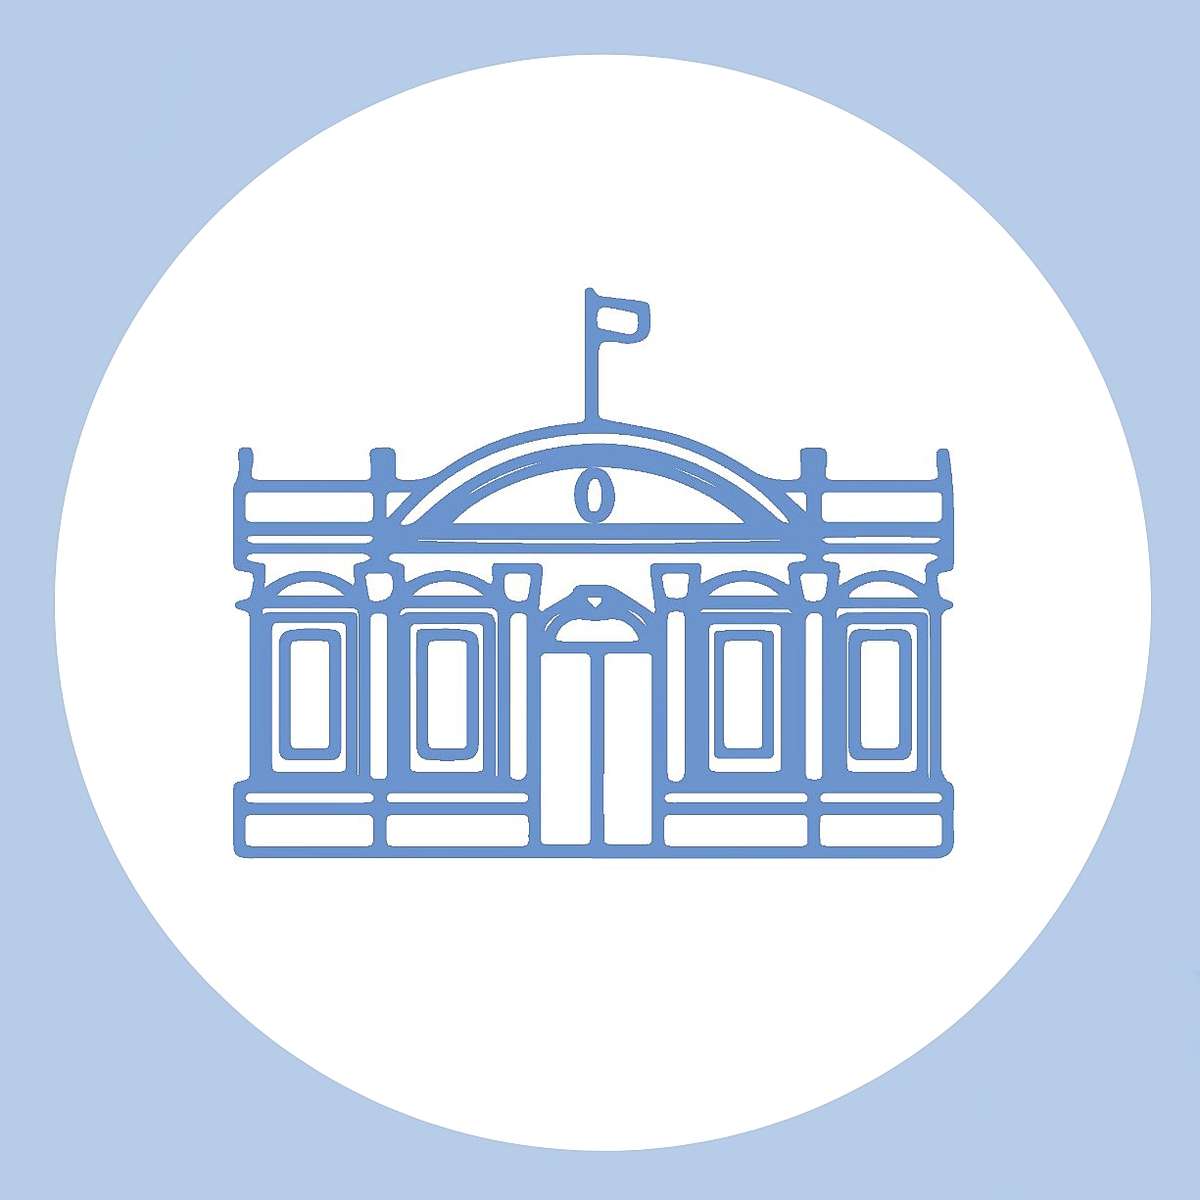 regeringens logotyp pussel online från foto